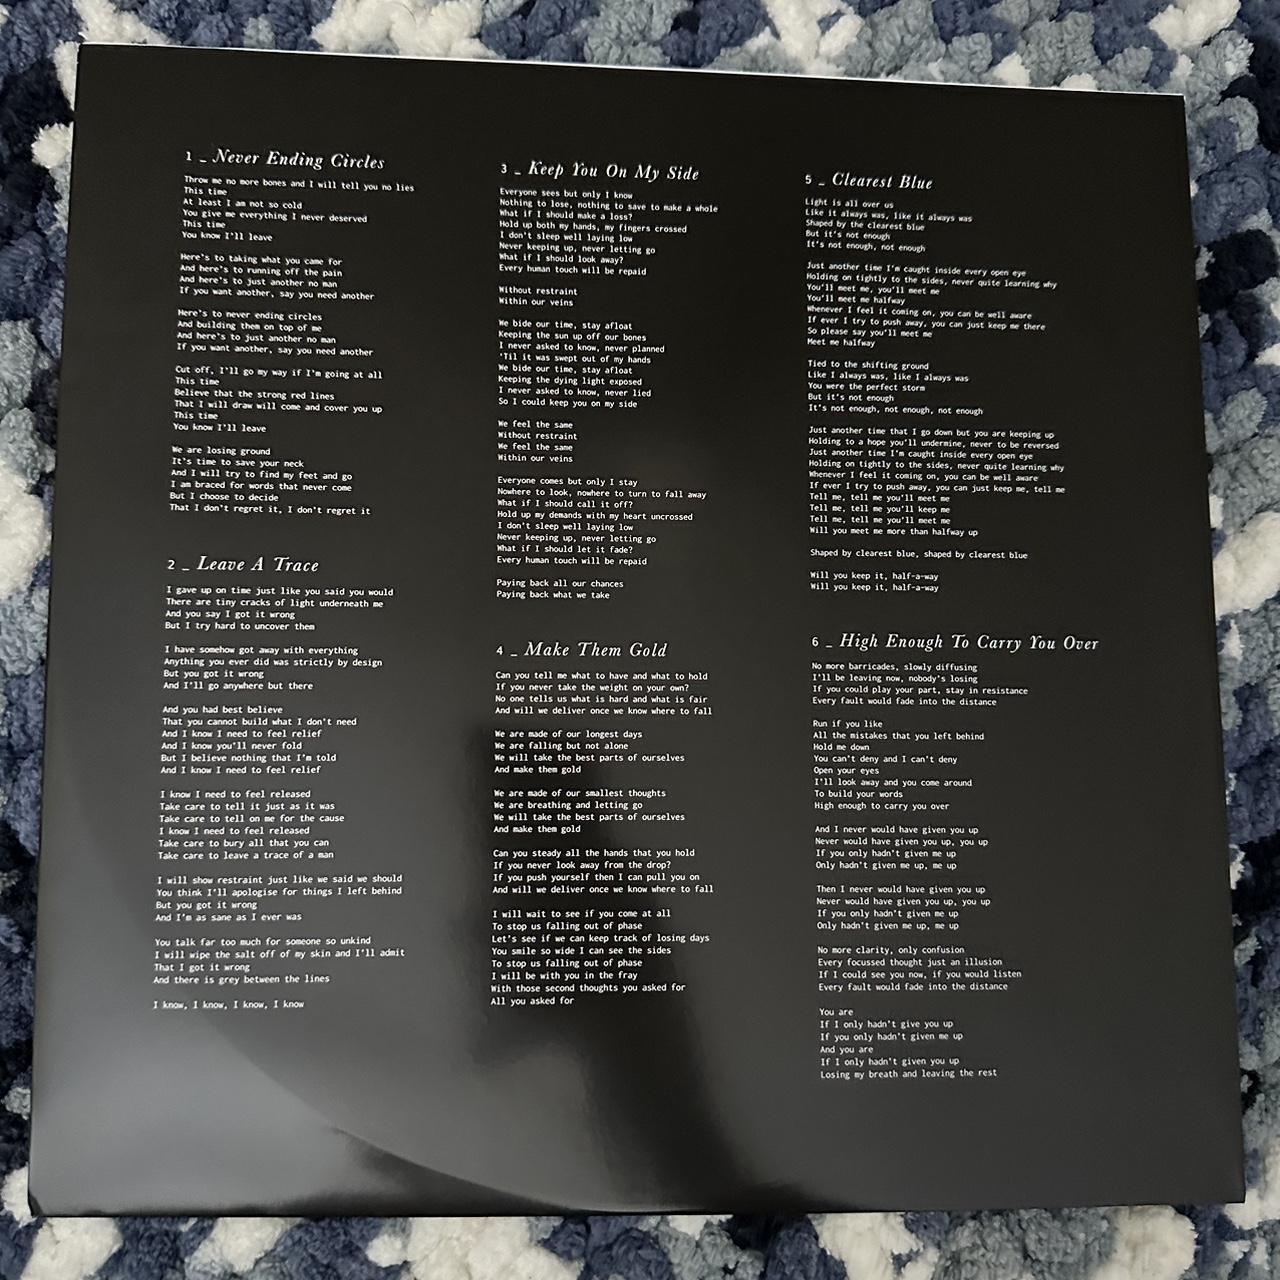 Every Open Eye by Chvrches vinyl record • Check my - Depop